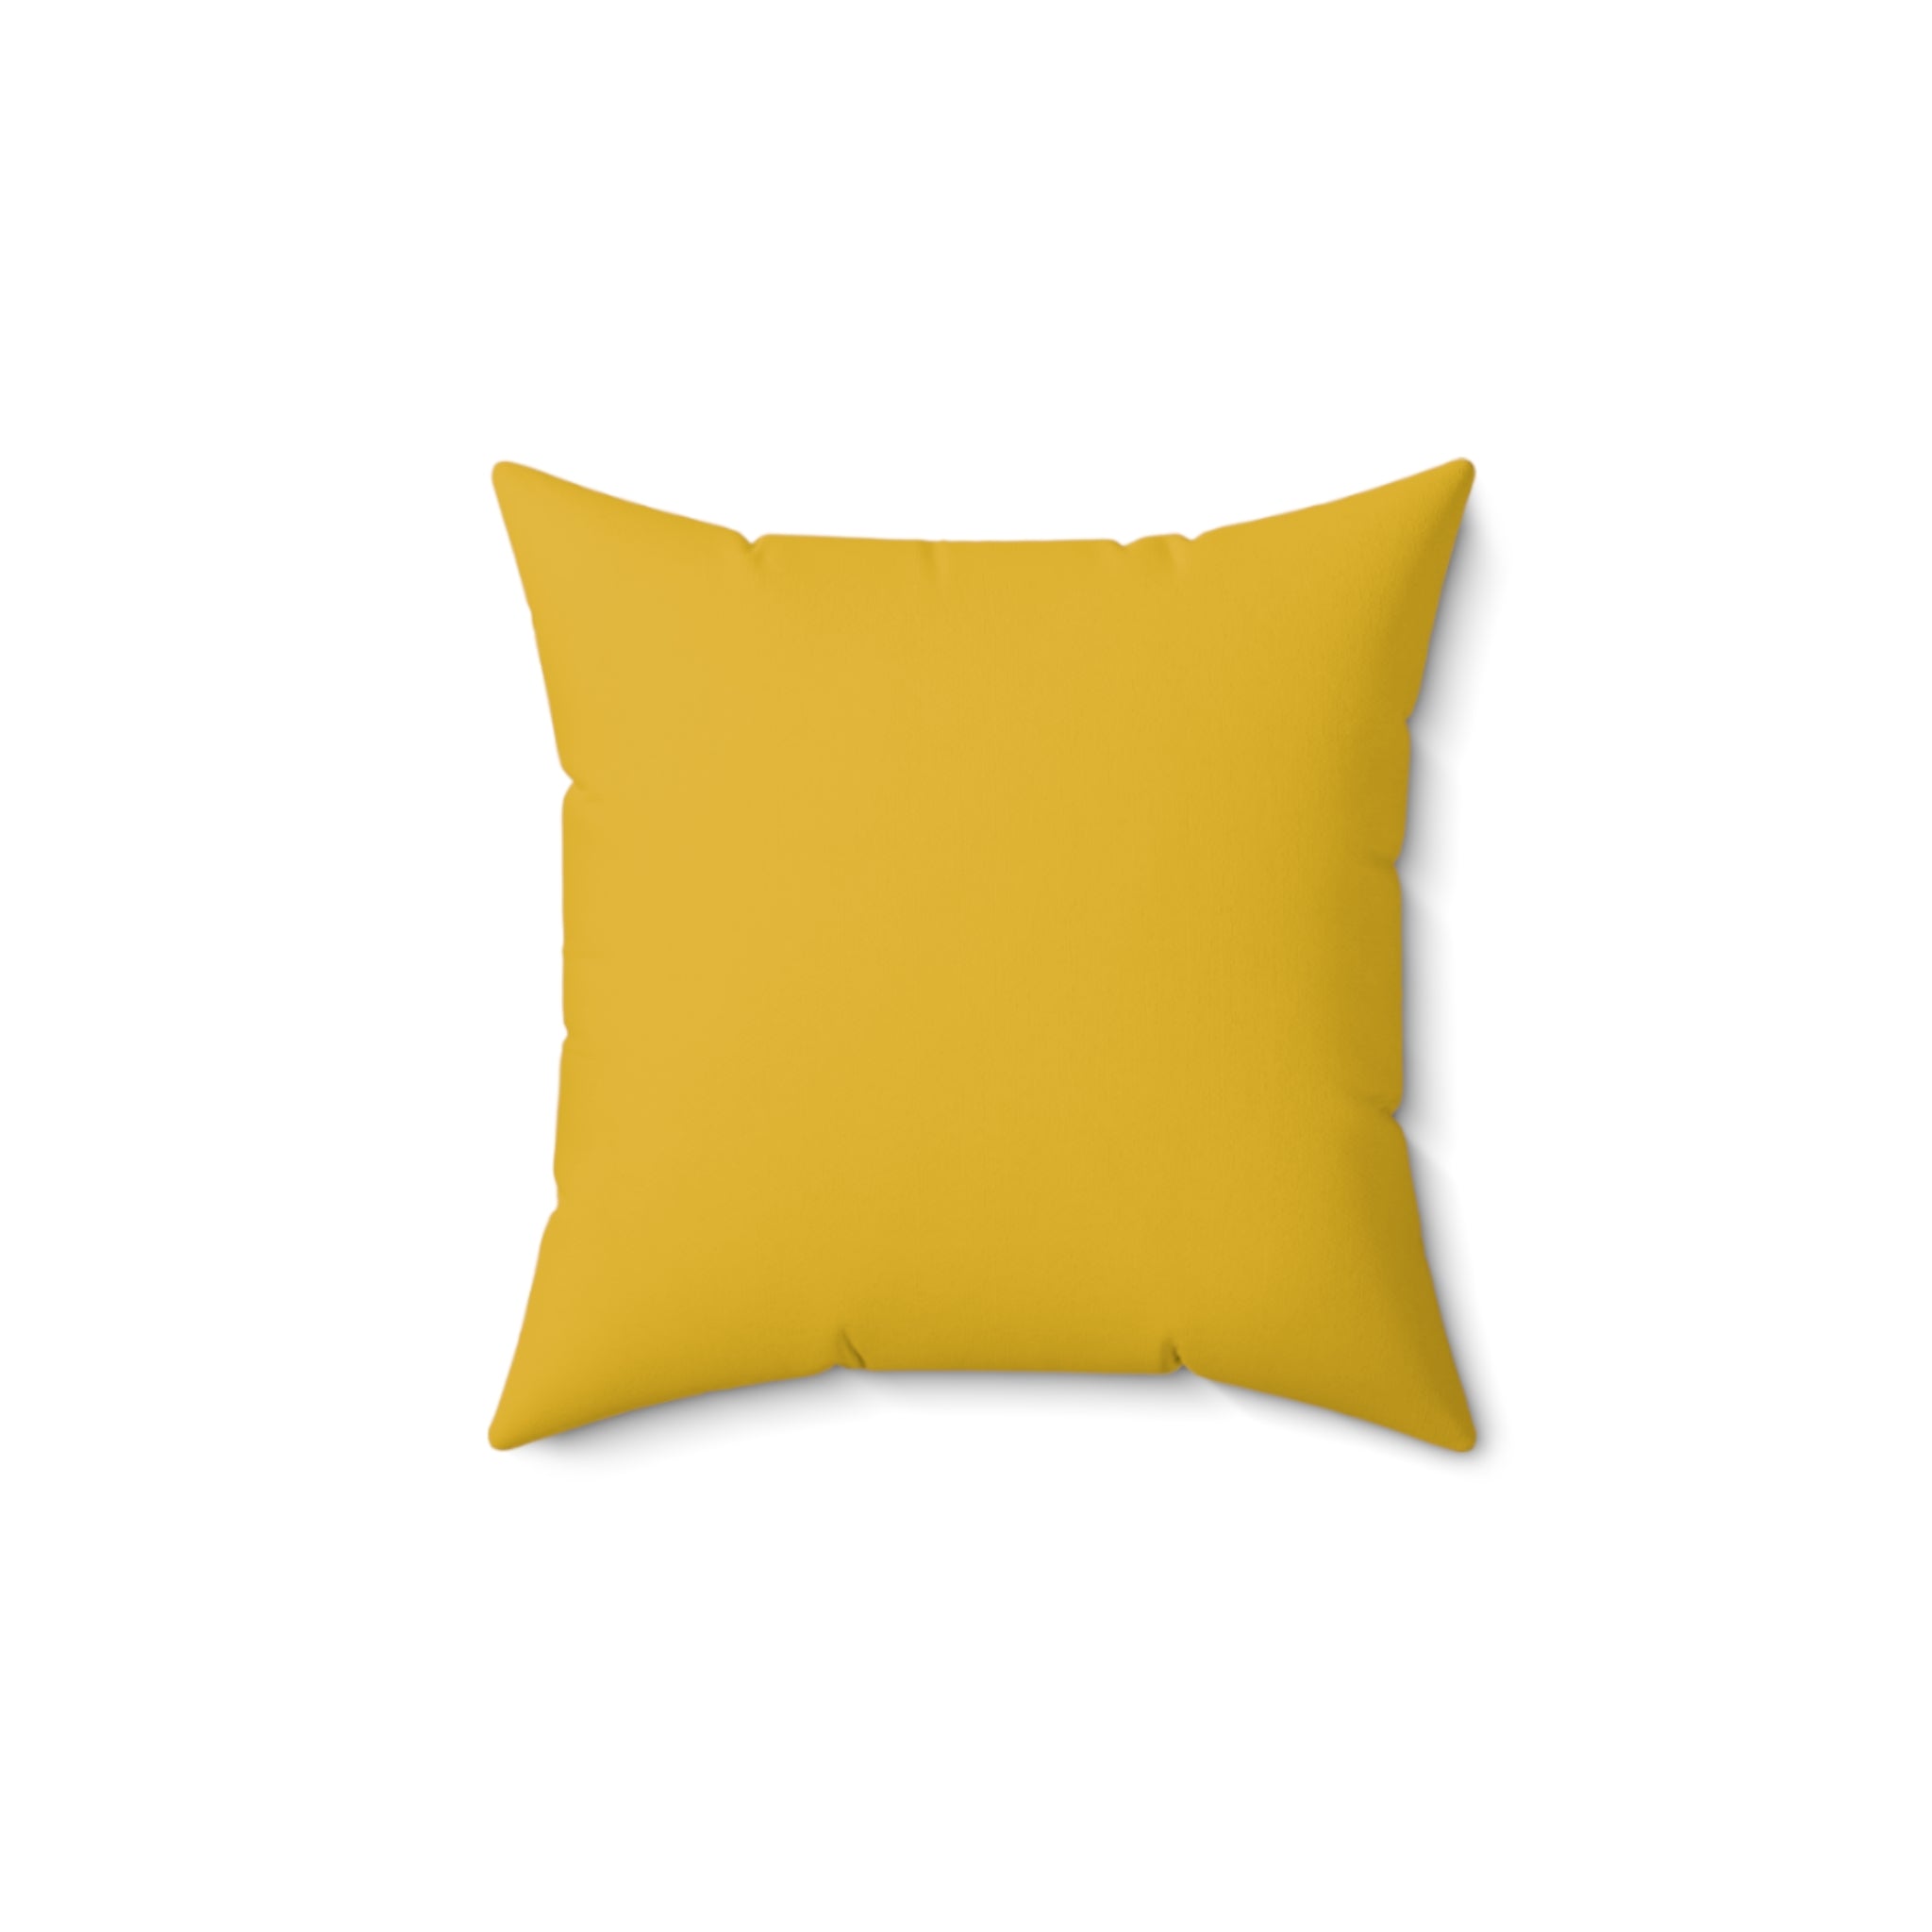 Sungold - Faux Suede Square Pillow